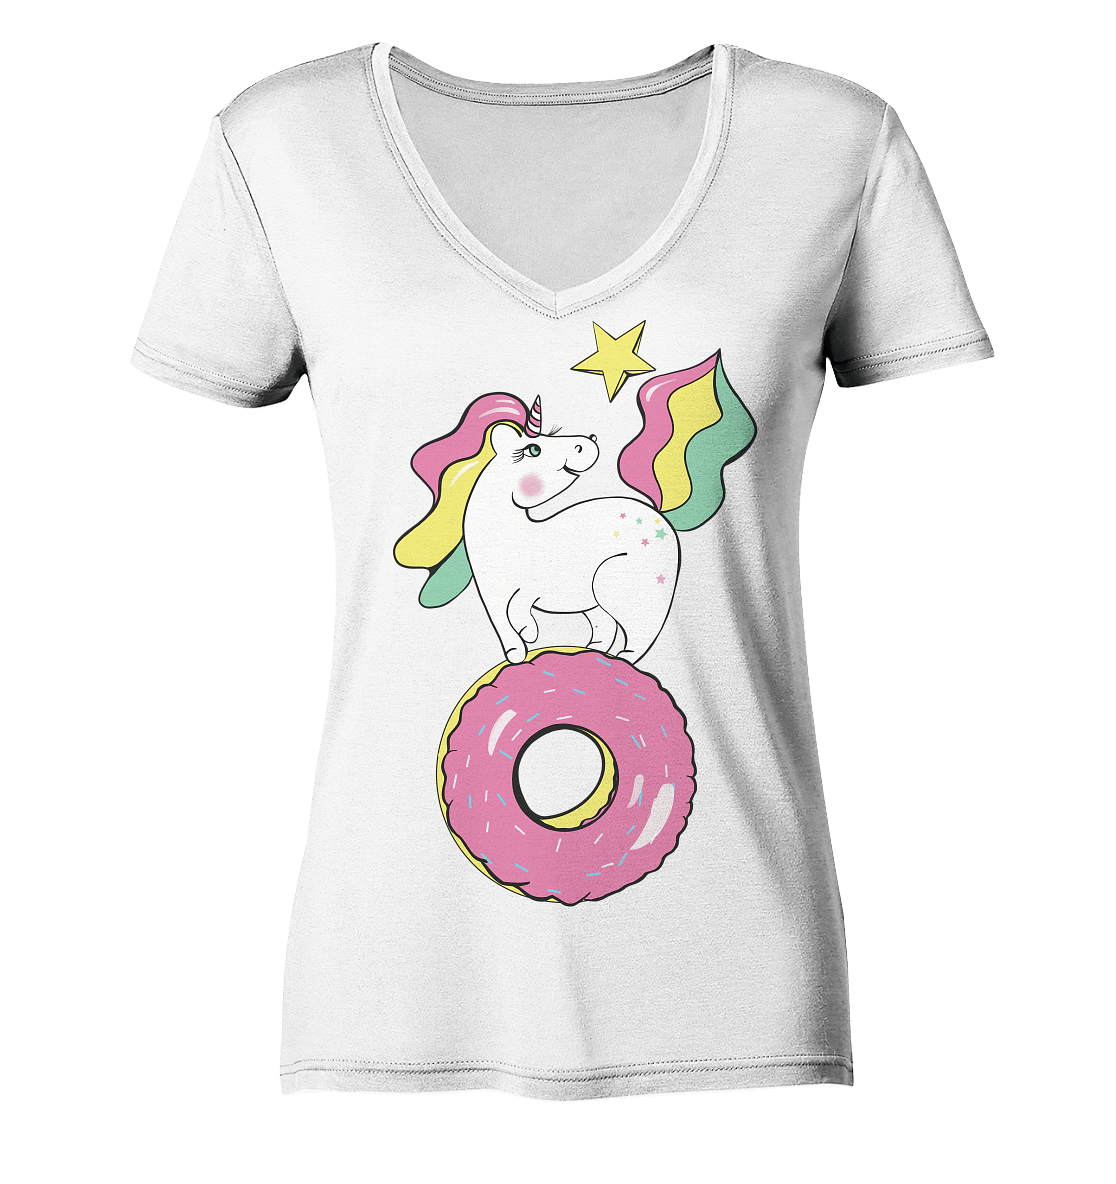 einhorn t shirt Einhorn auf Donut V-Neck t shirt Unicorn auf Donut Muster t shirt in weiß Träumende Einhörner 